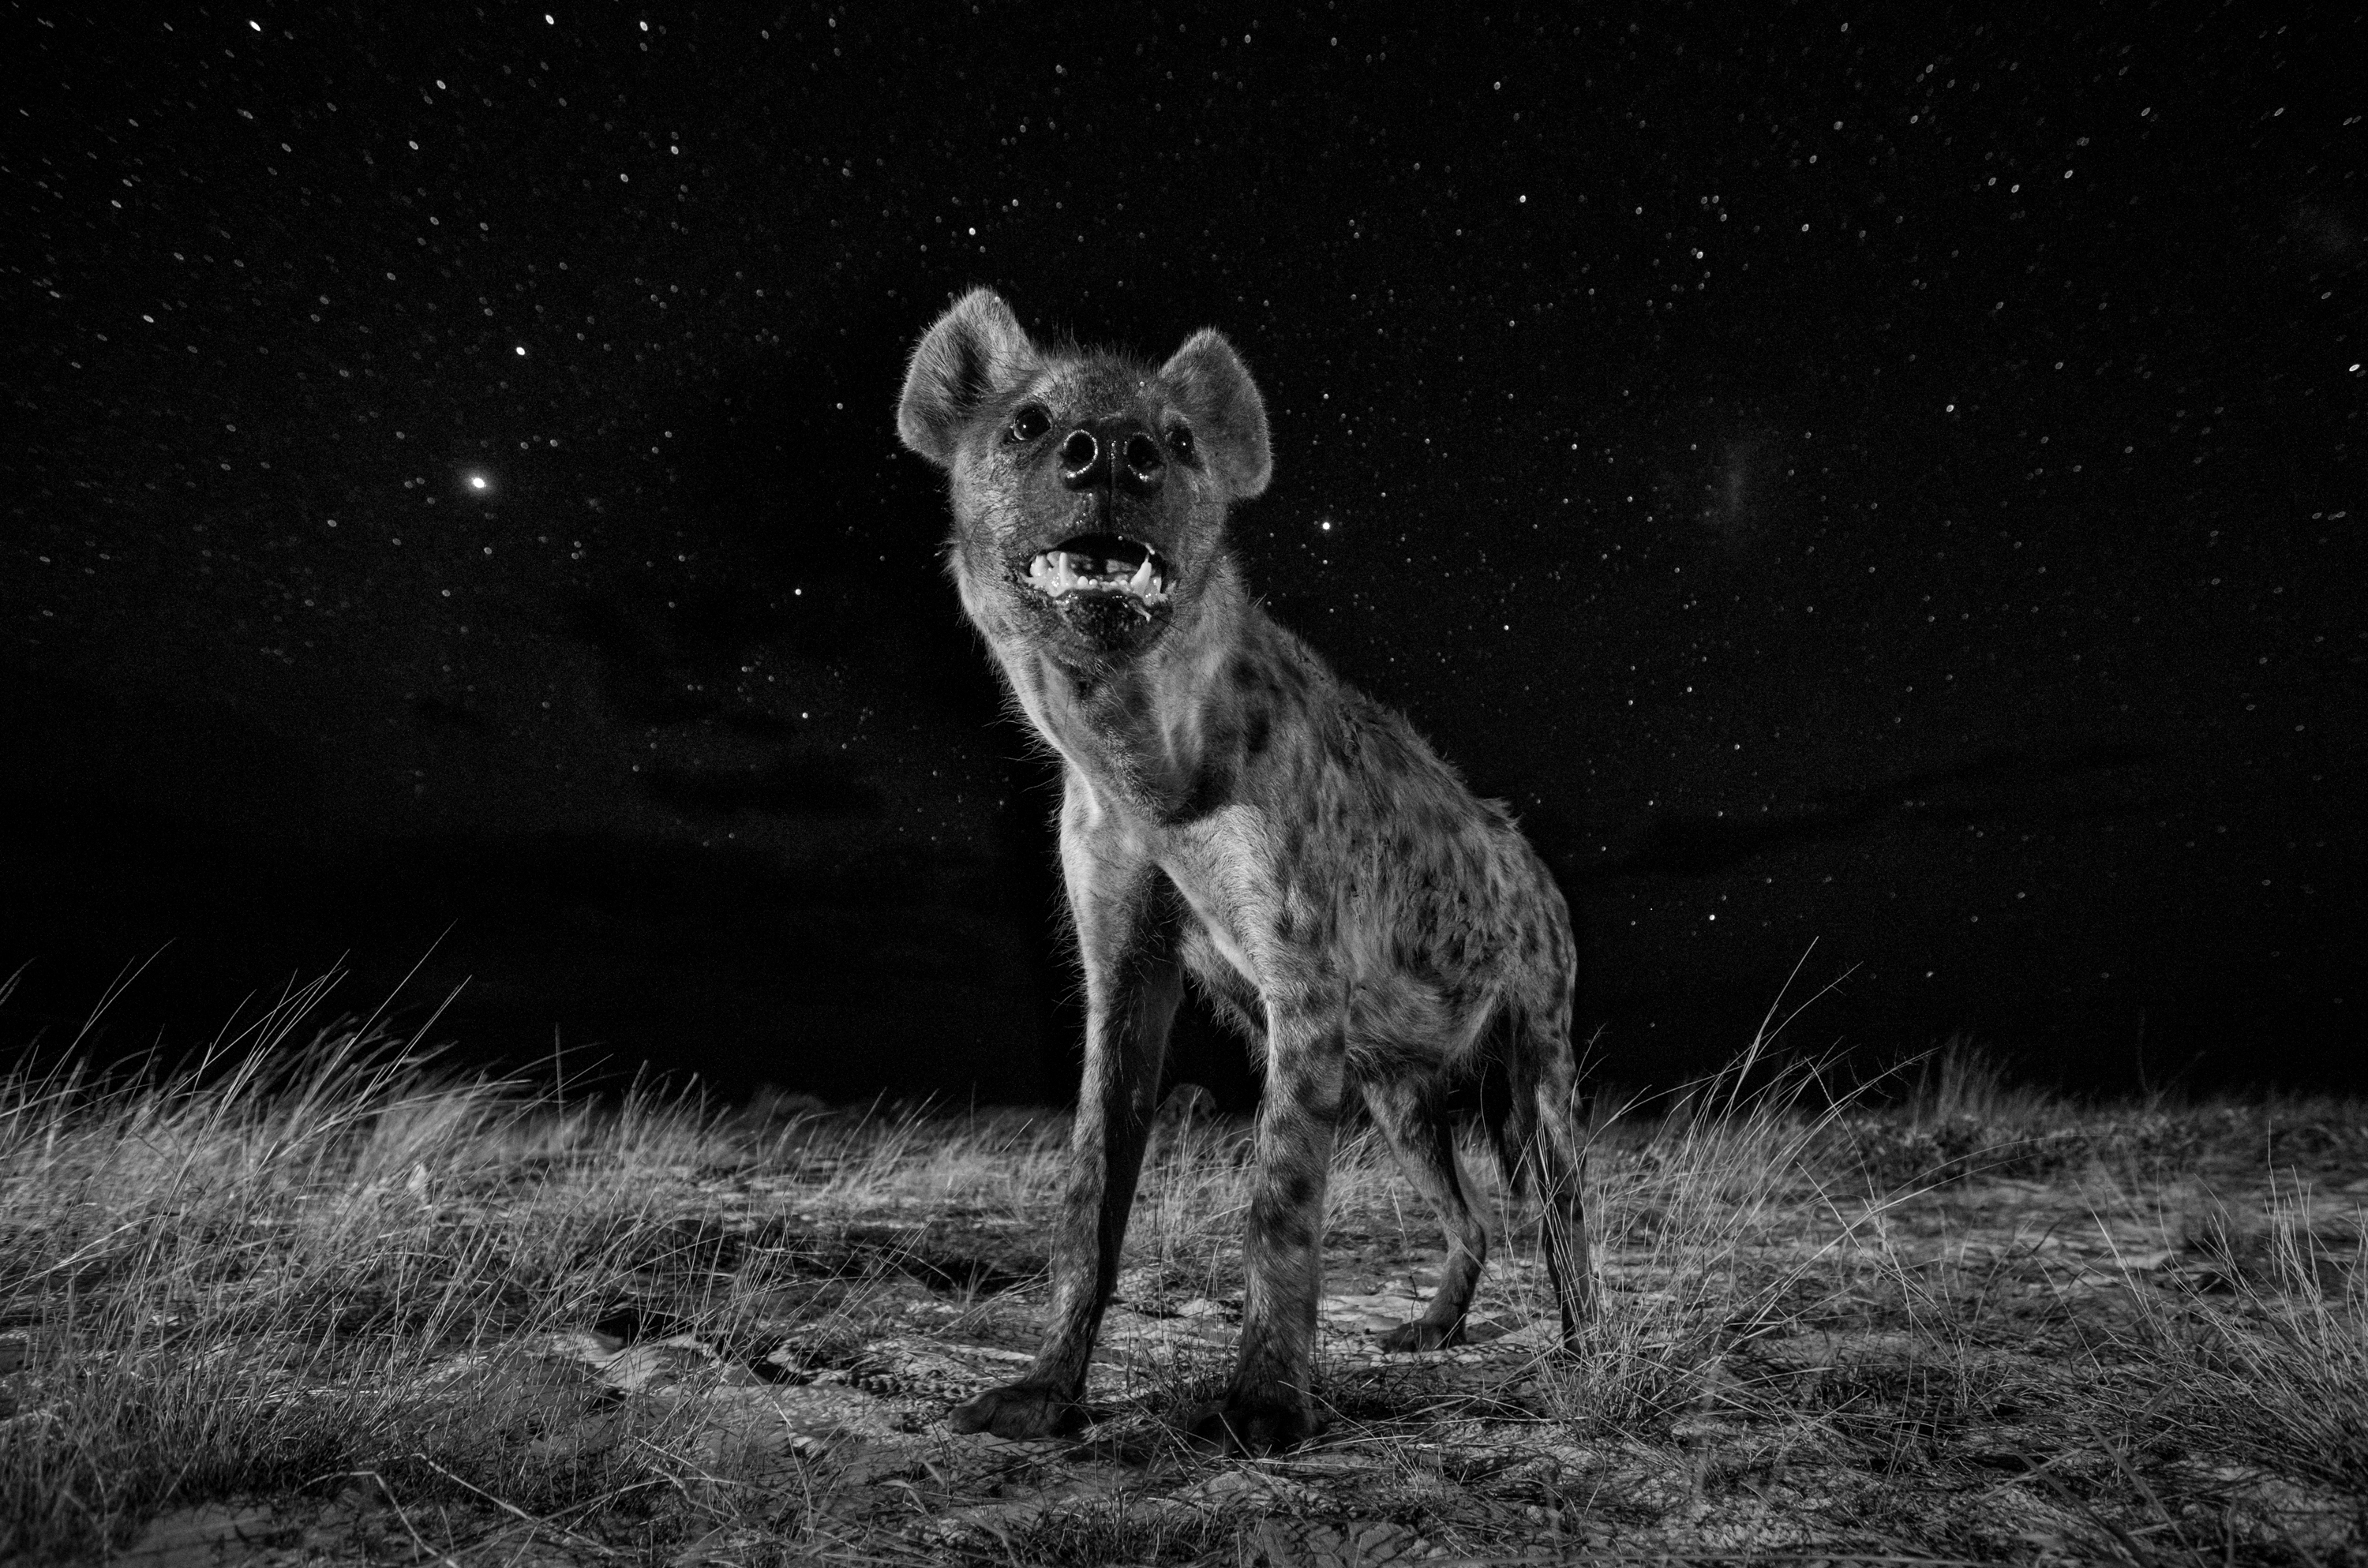 The Hyena's World